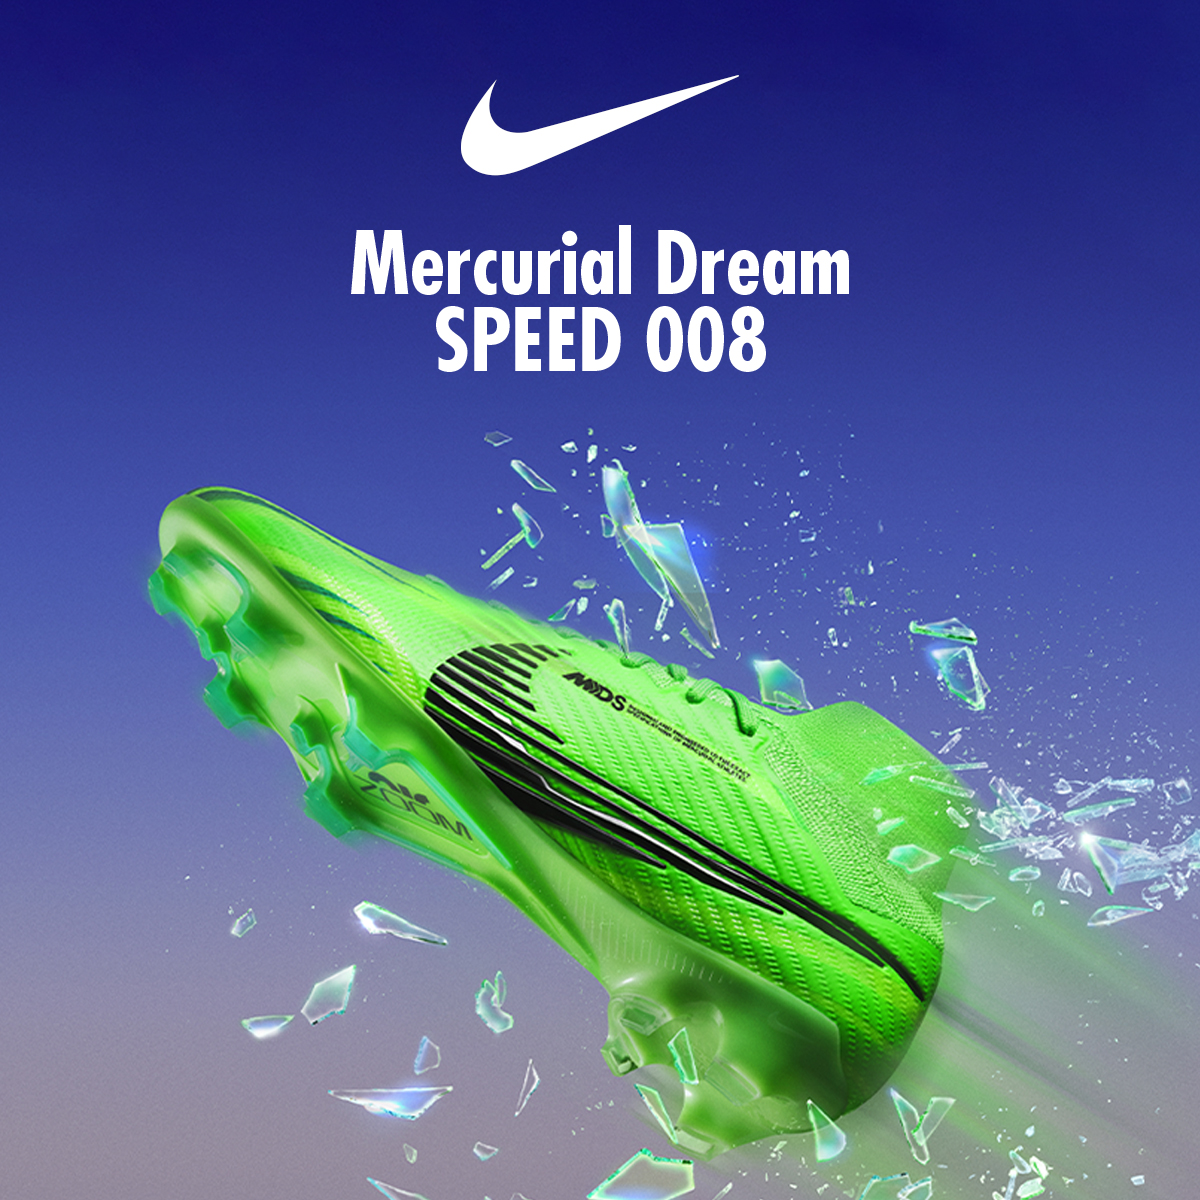 Sogno Mercuriale speed 008